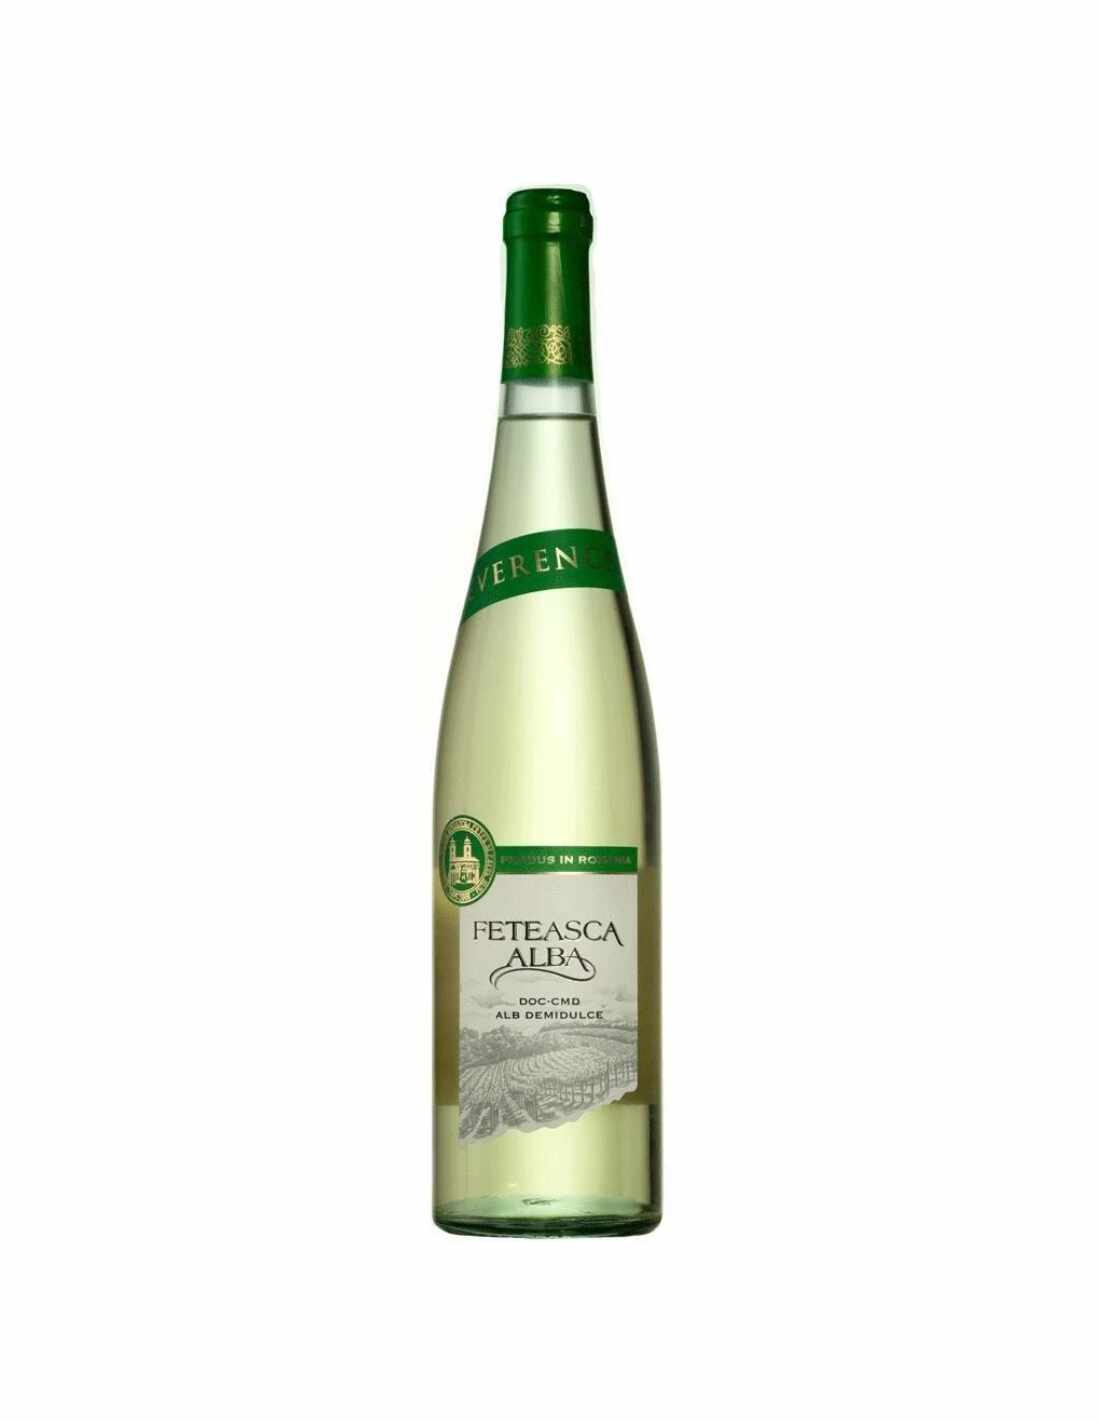 Vin alb demidulce, Feteasca Alba, Reverence Husi, 0.75L, 12% alc., Romania